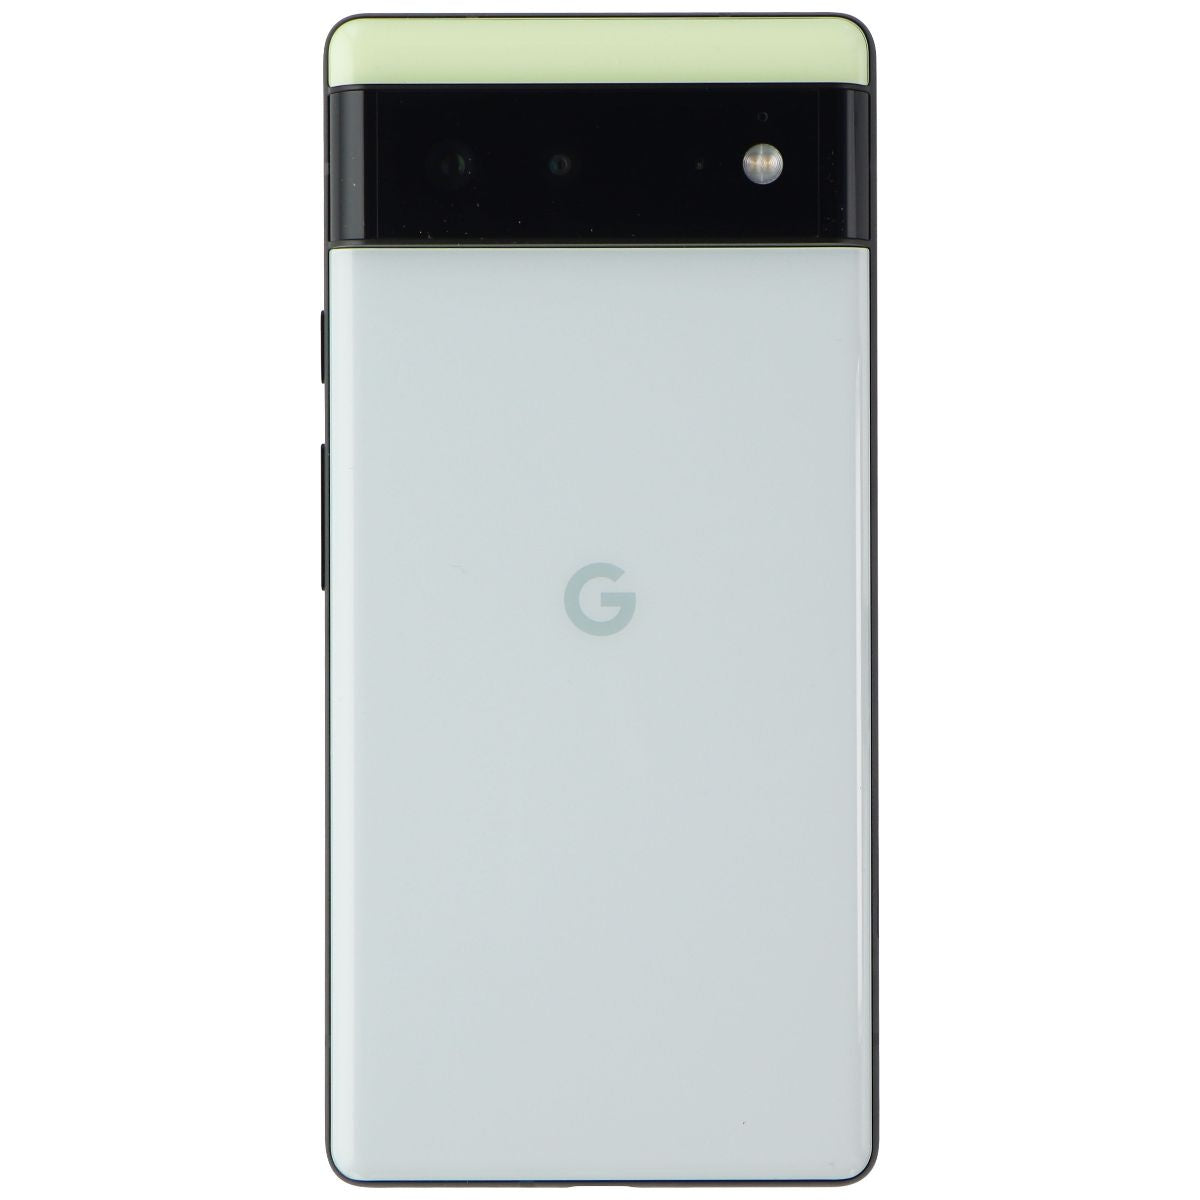 Google Pixel 6 (6.4-inch) Smartphone (GB7N6) UNLOCKED - 128GB/Sorta Seafoam Cell Phones & Smartphones Google    - Simple Cell Bulk Wholesale Pricing - USA Seller